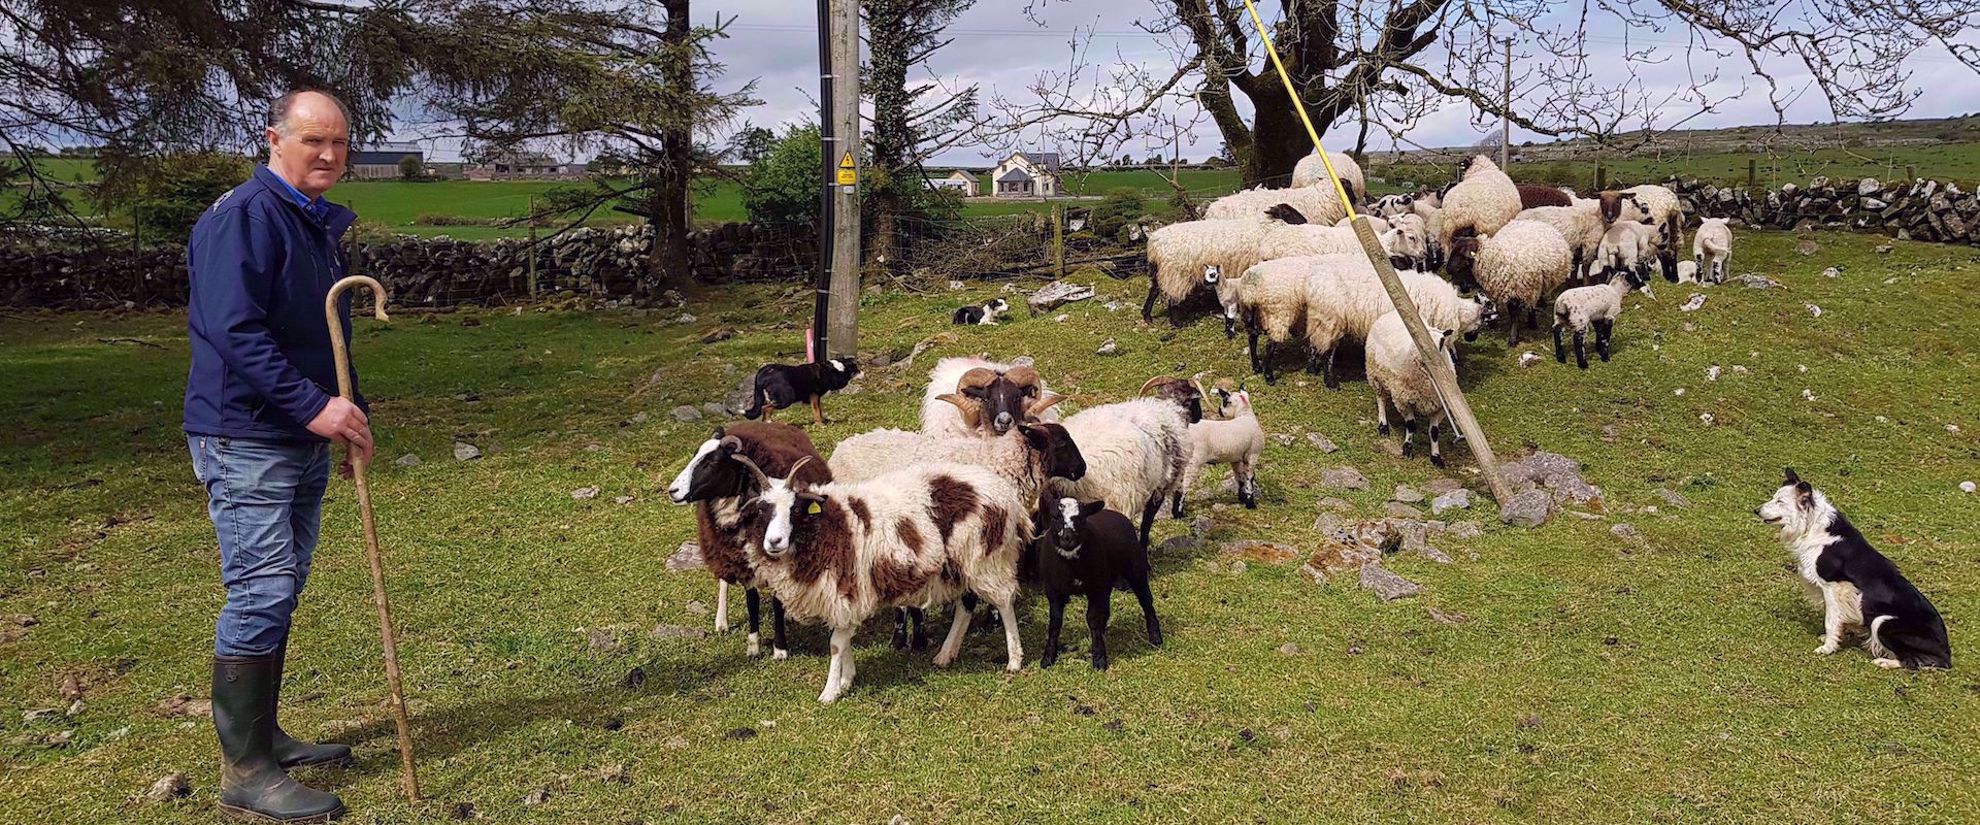 Sheepdog demonstration in Ireland